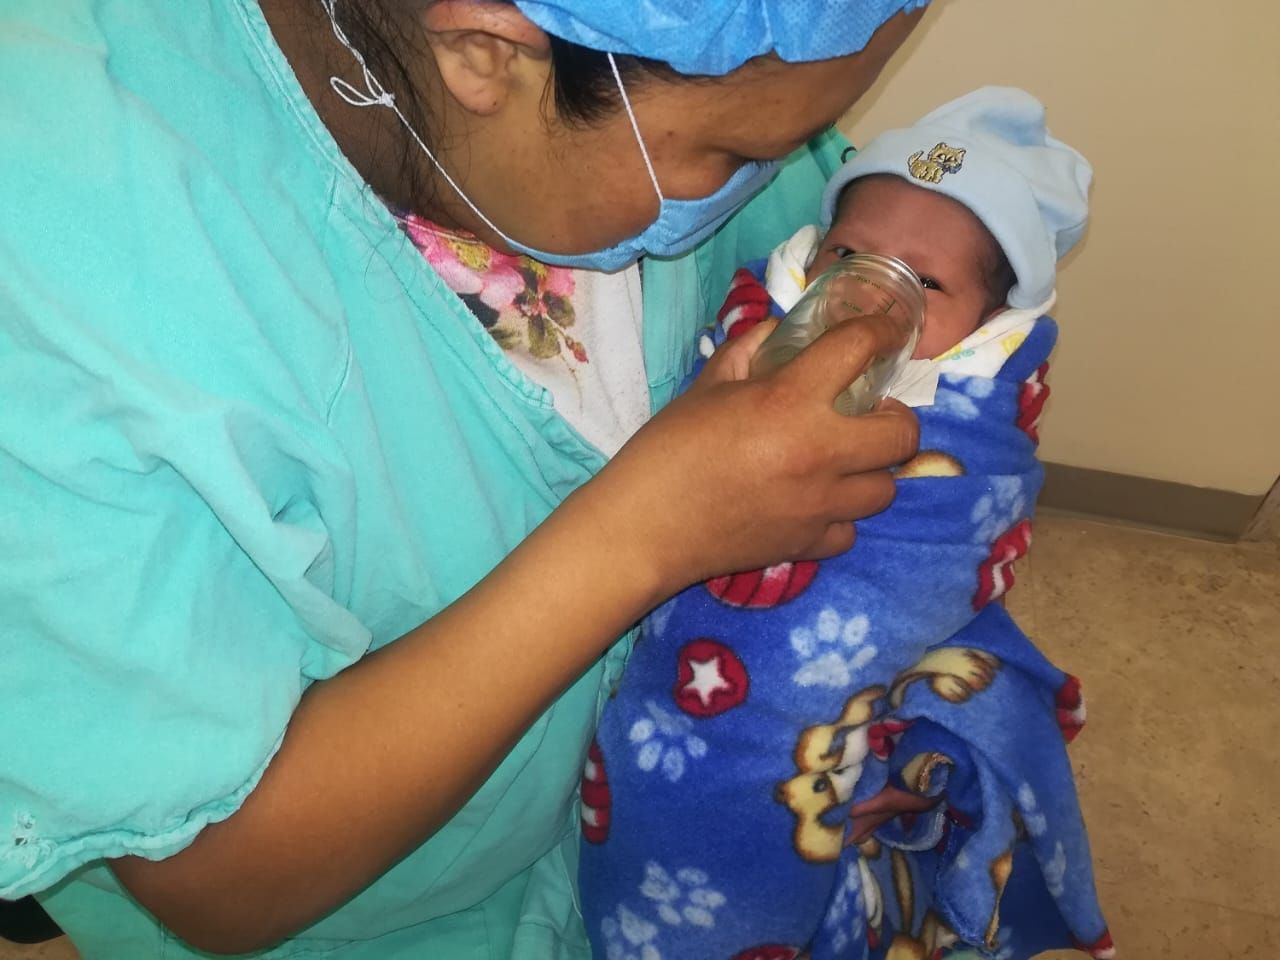 Llama Salud EDOMÉX a Donar Leche Humana Para Salvar
Vidas de Bebés con Complicaciones de Nacimiento
